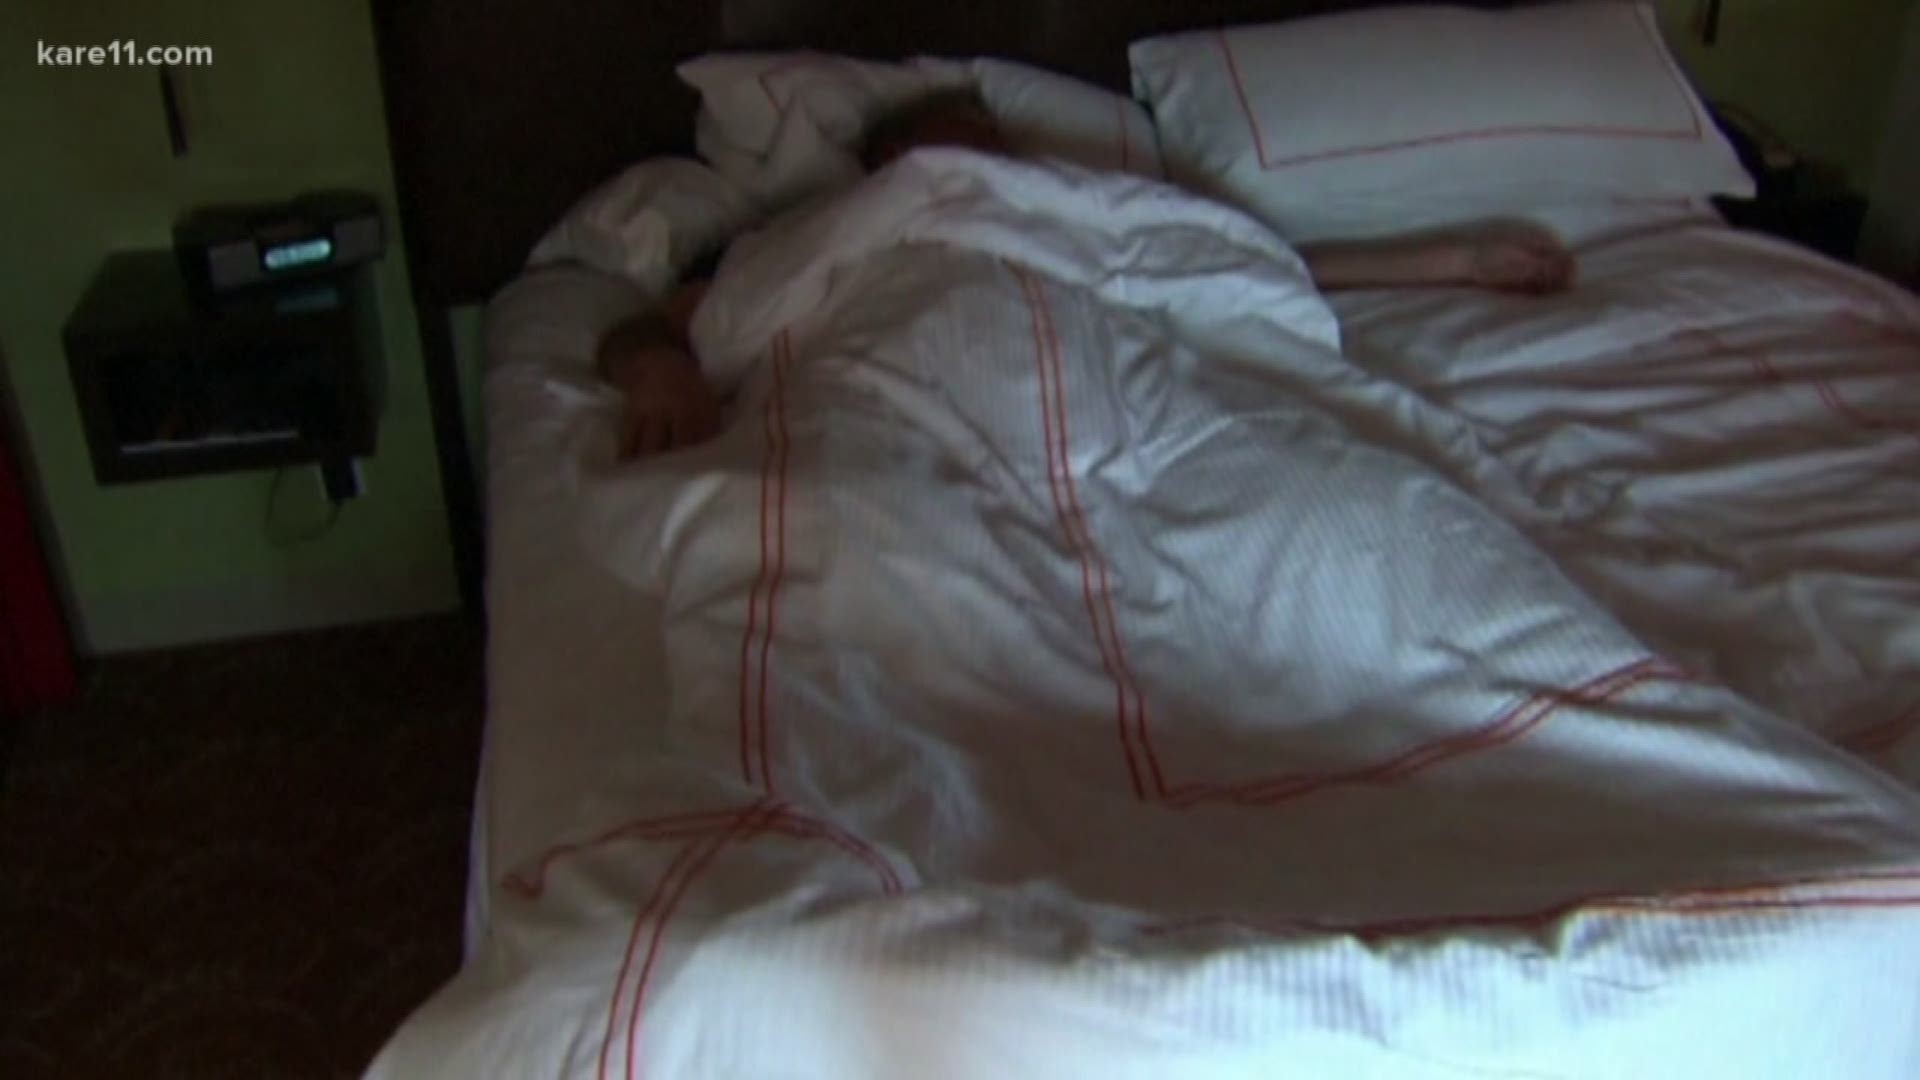 Health and sleep experts talk shut eye